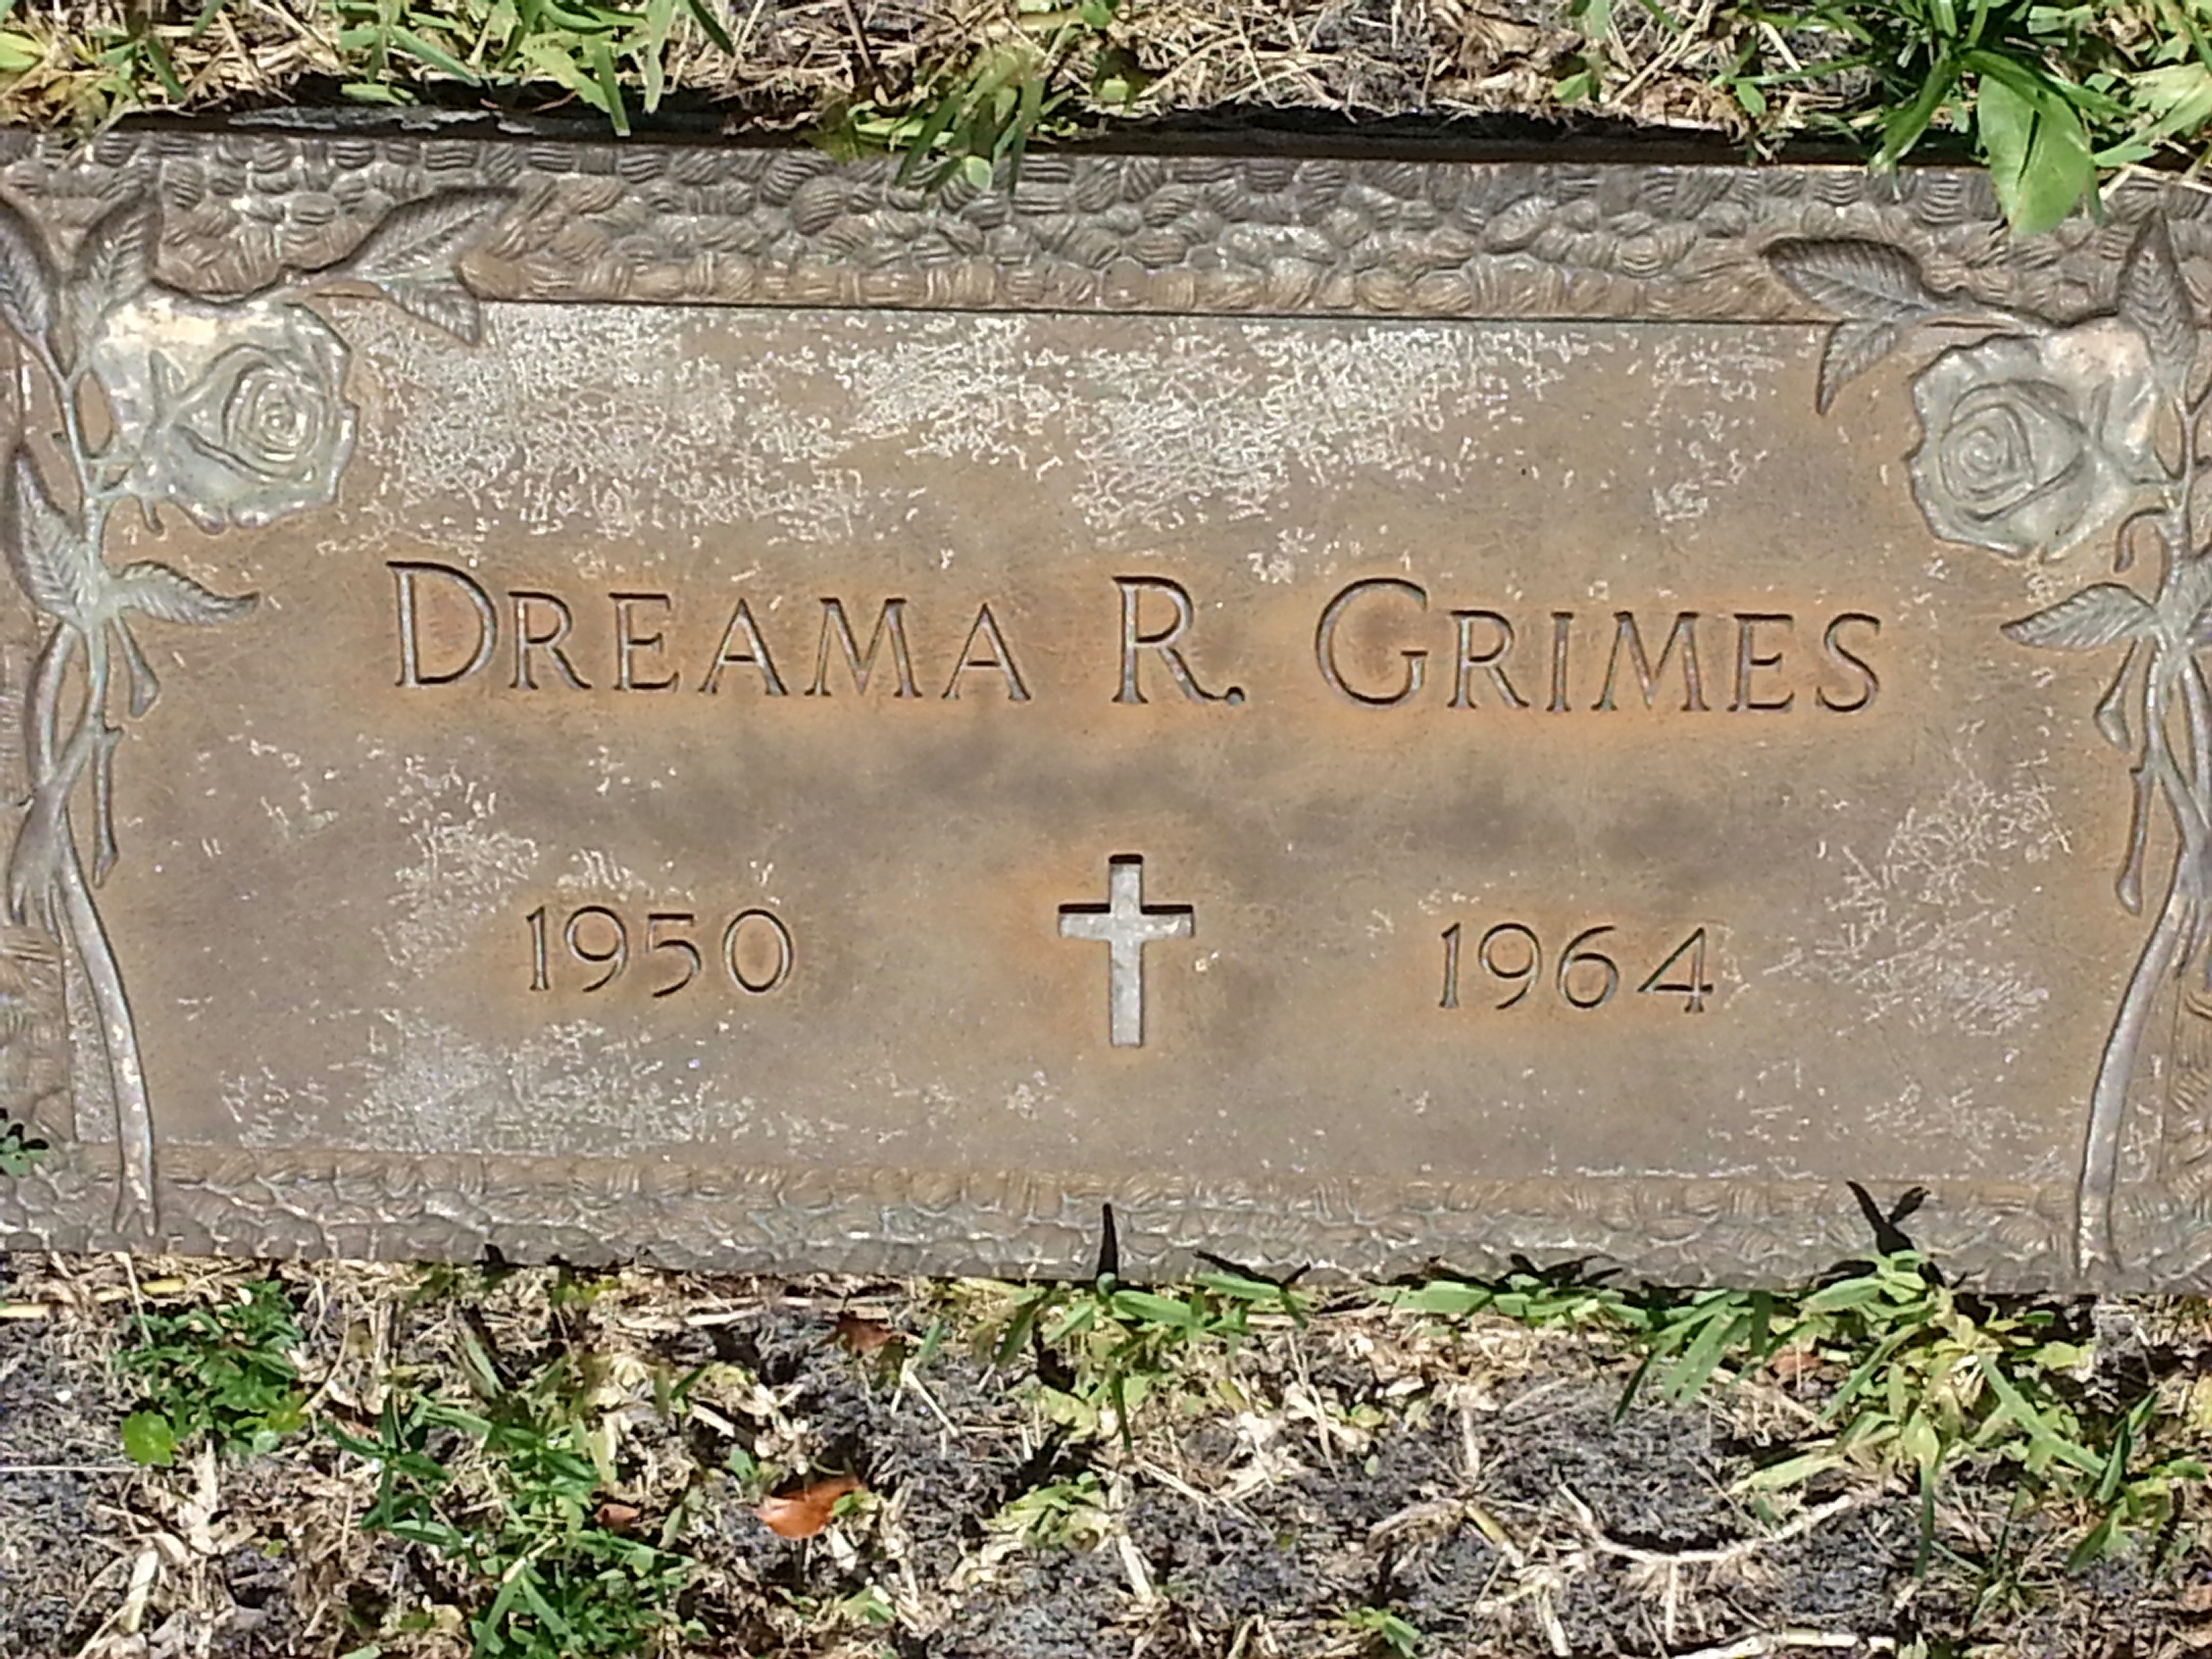 Dreama R Grimes